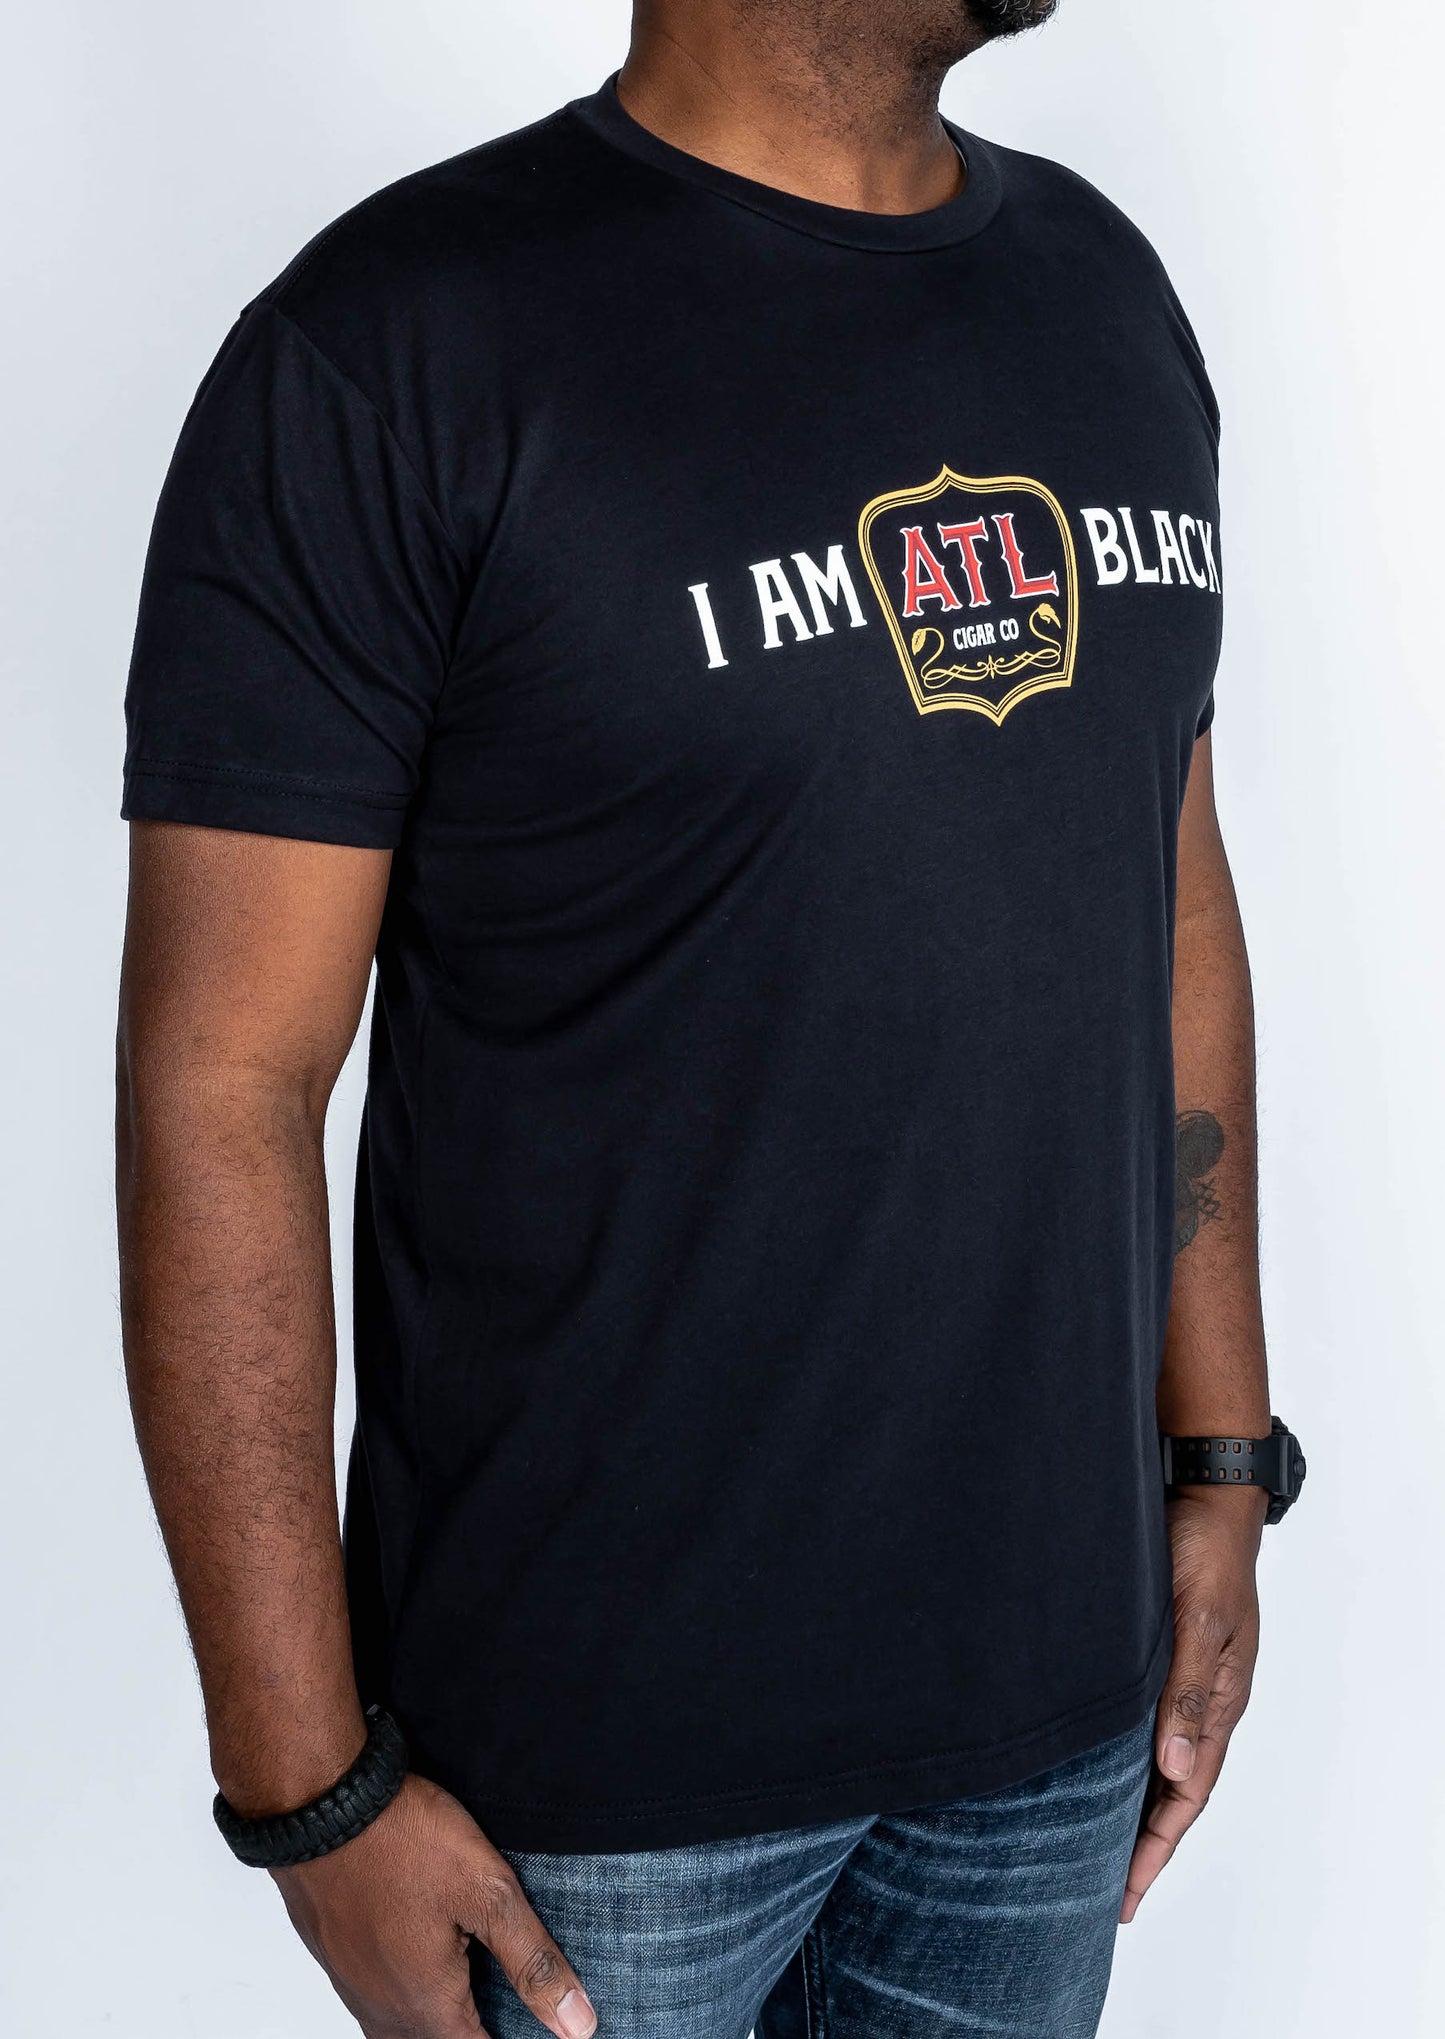 T-shirt "I am ATL Black" (Unisex)